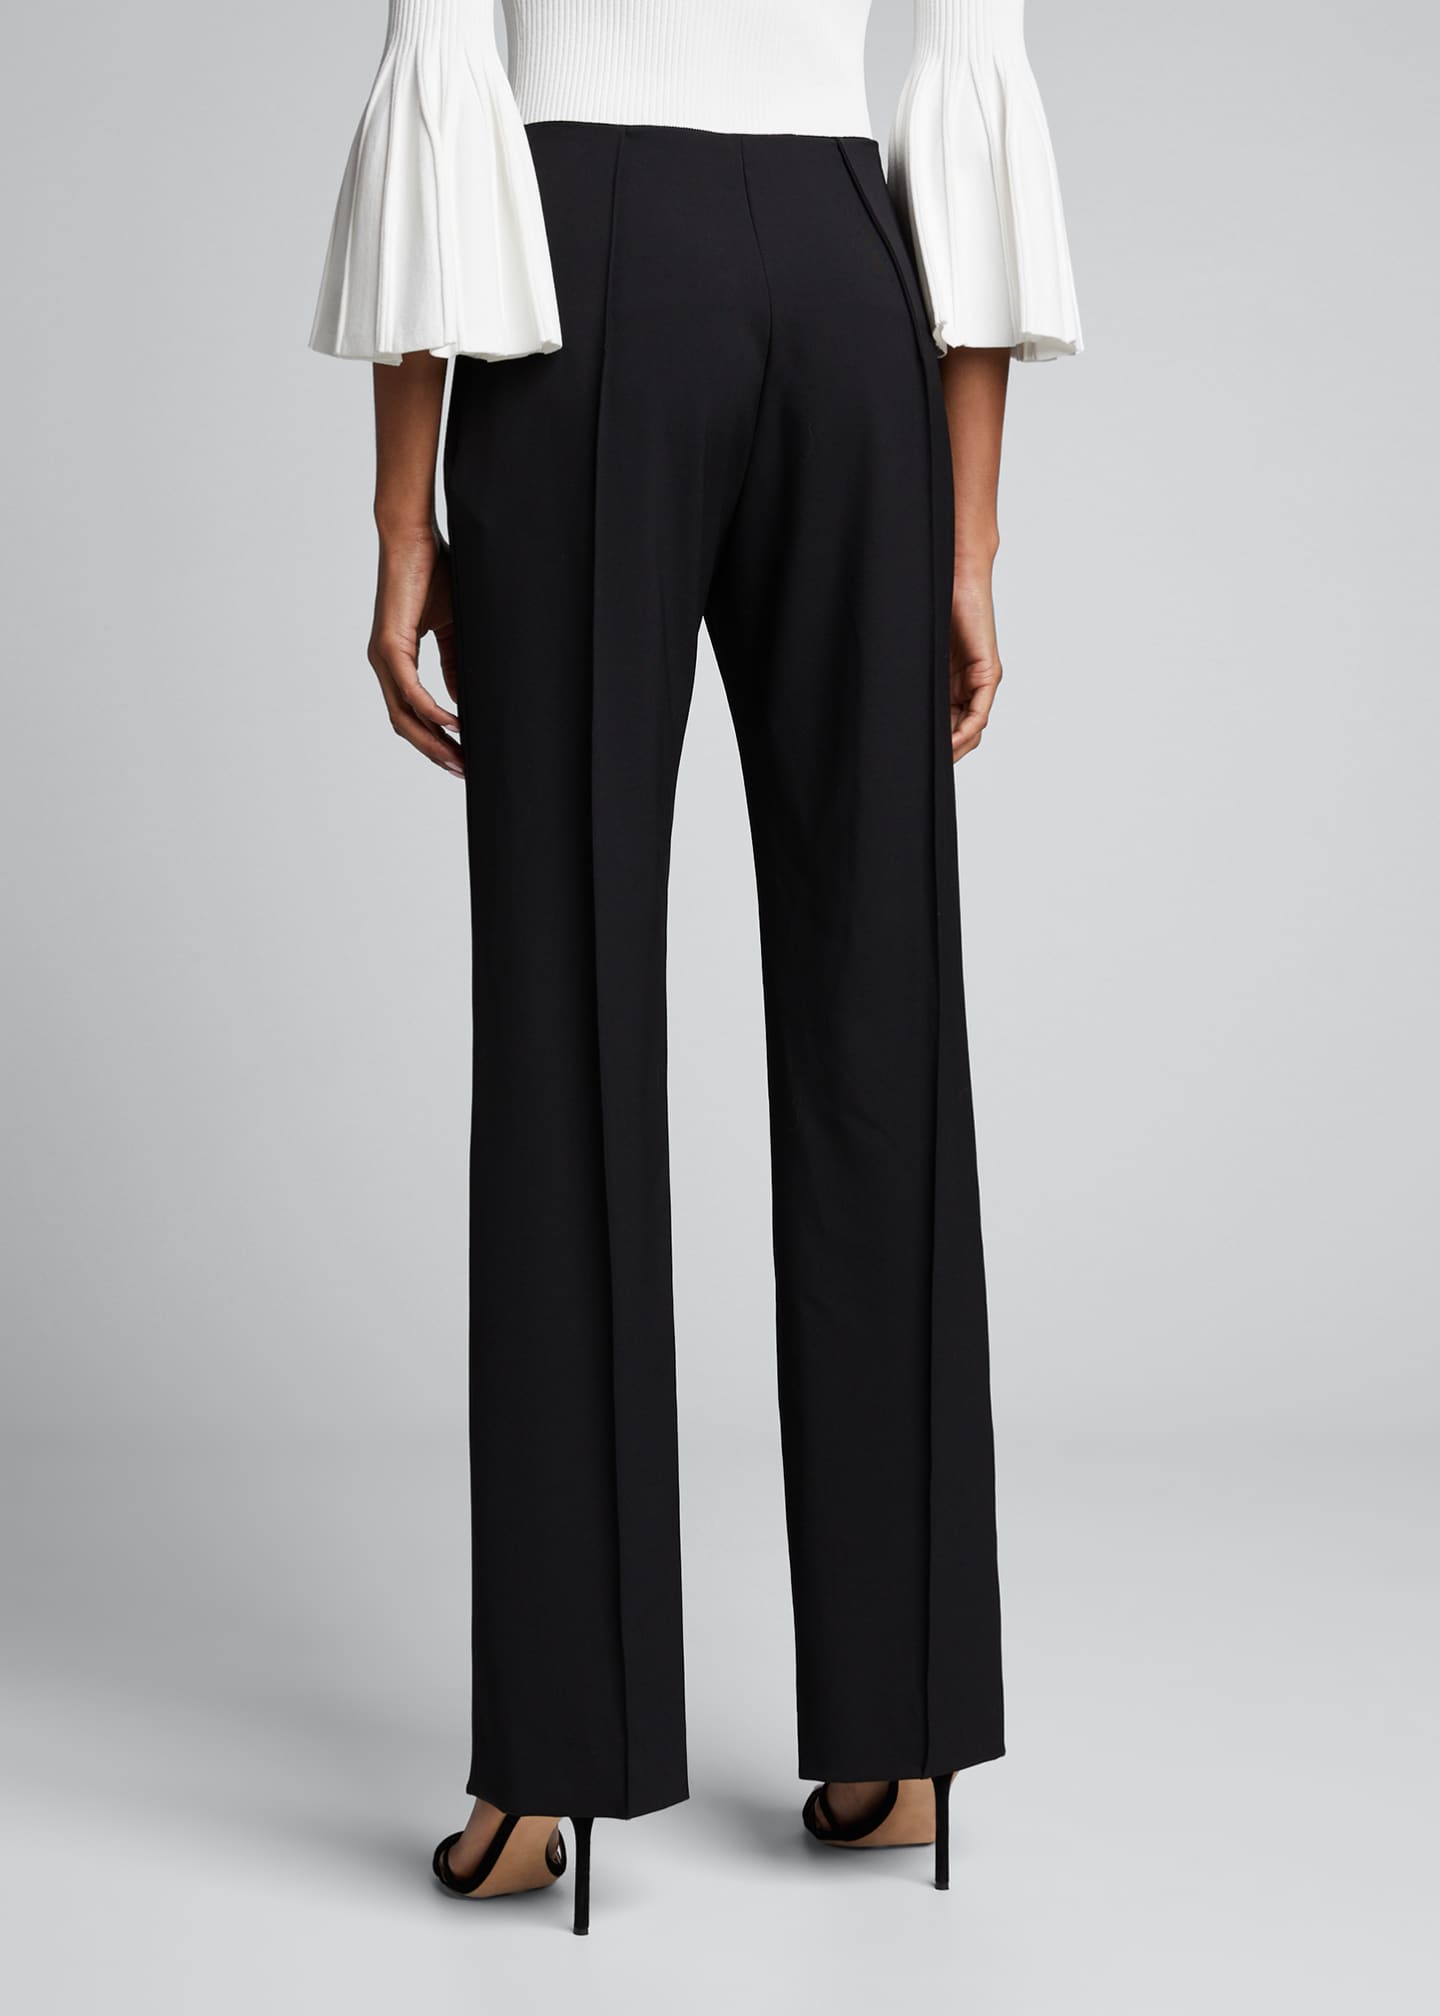 Carolina Herrera Icon Wide-Leg Wool Crepe Pants - Bergdorf Goodman